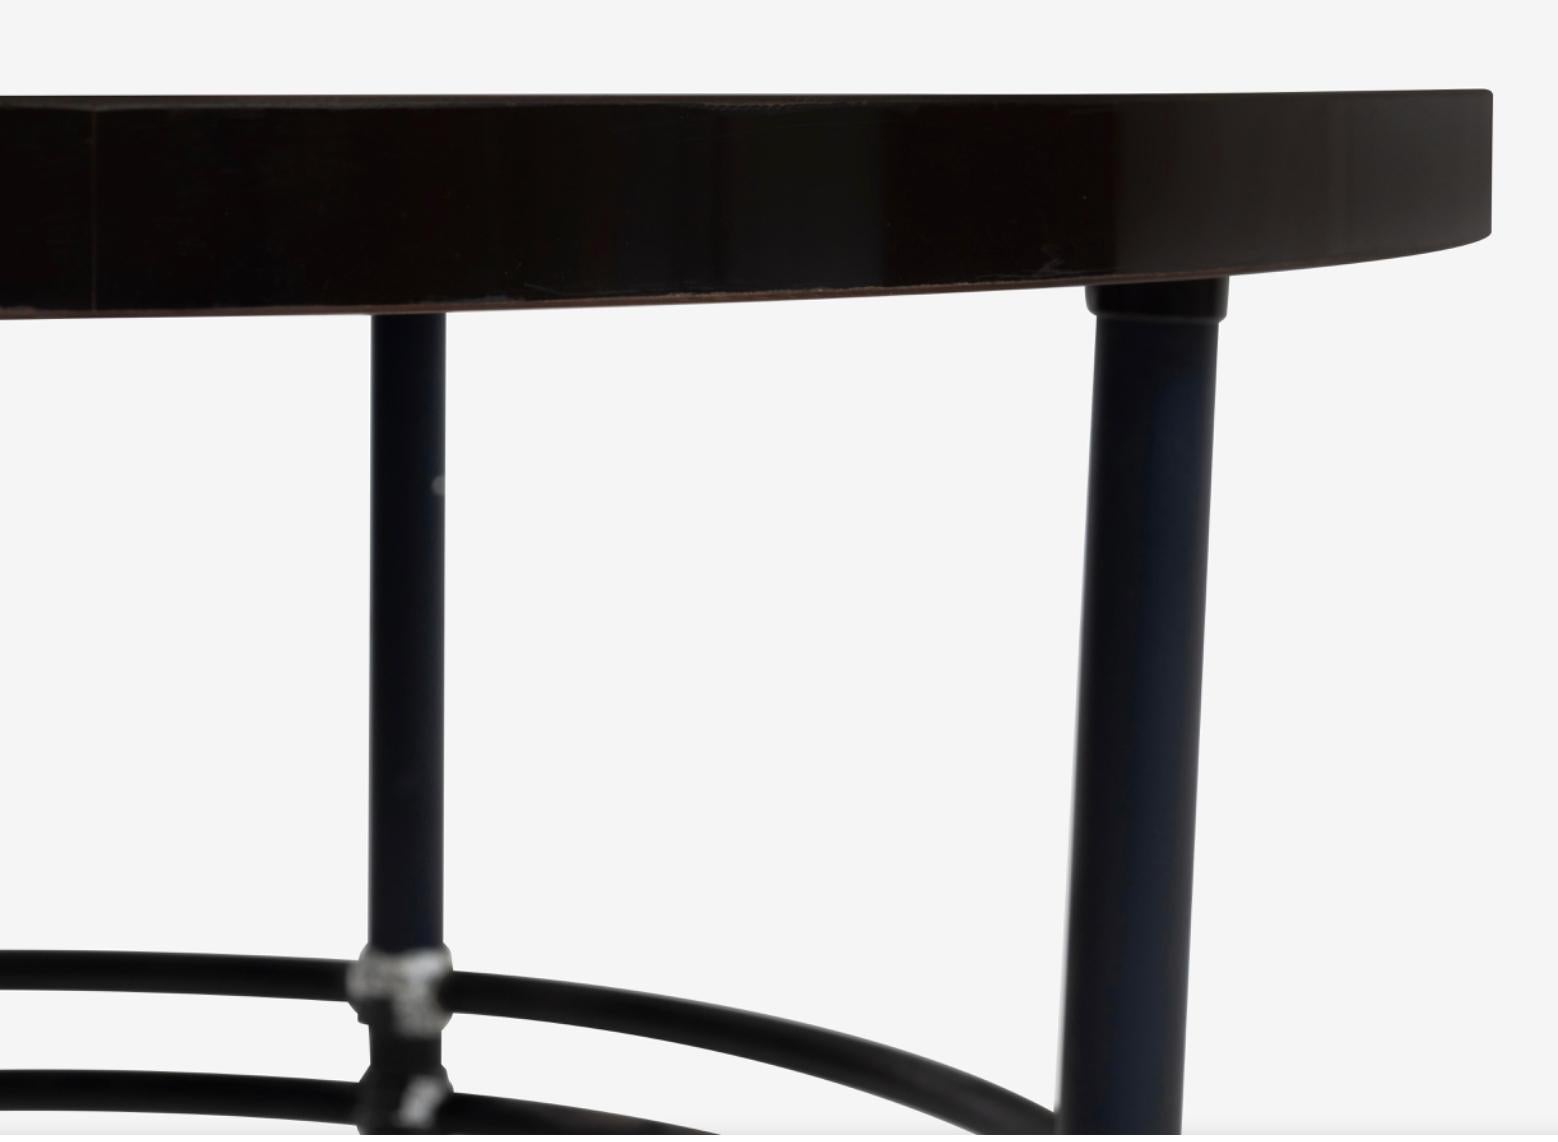 Mid-20th Century Warren McArthur Streamline Modern Aluminum Black Coffee Table Model 1559-s 1930s For Sale